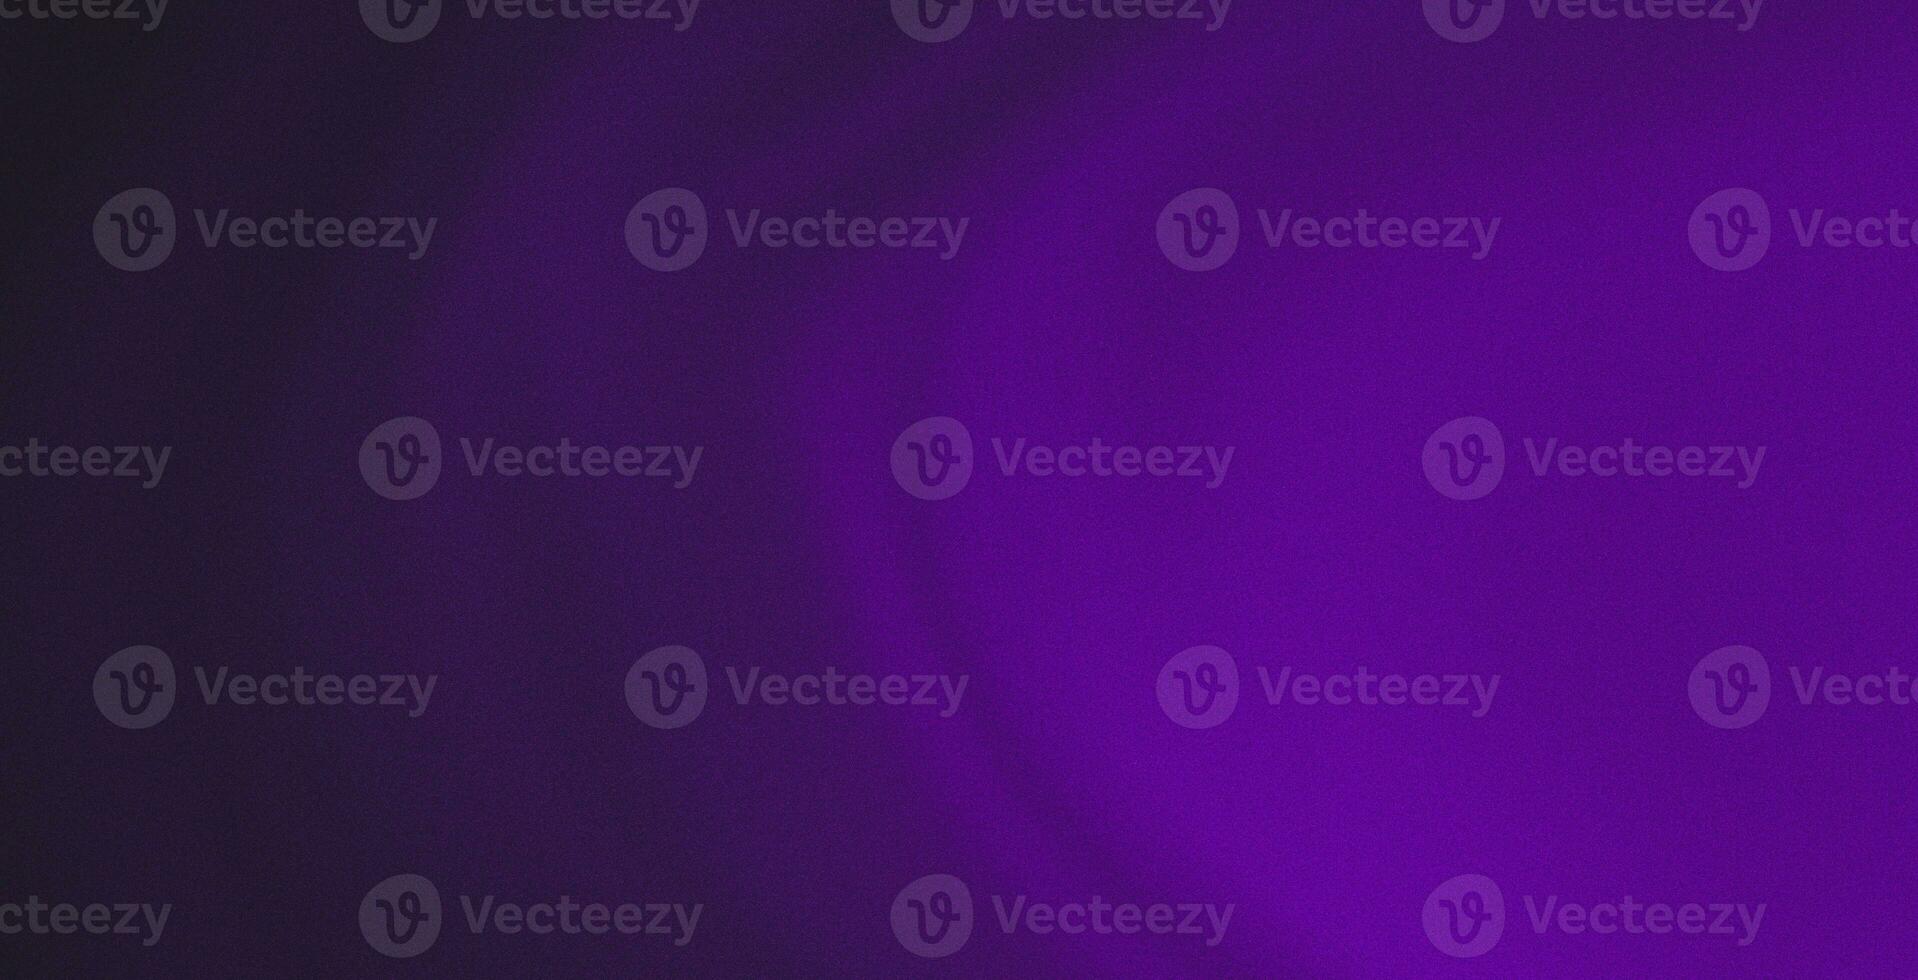 Purple grainy background dark color gradient noise texture effect, abstract web banner header backdrop design photo